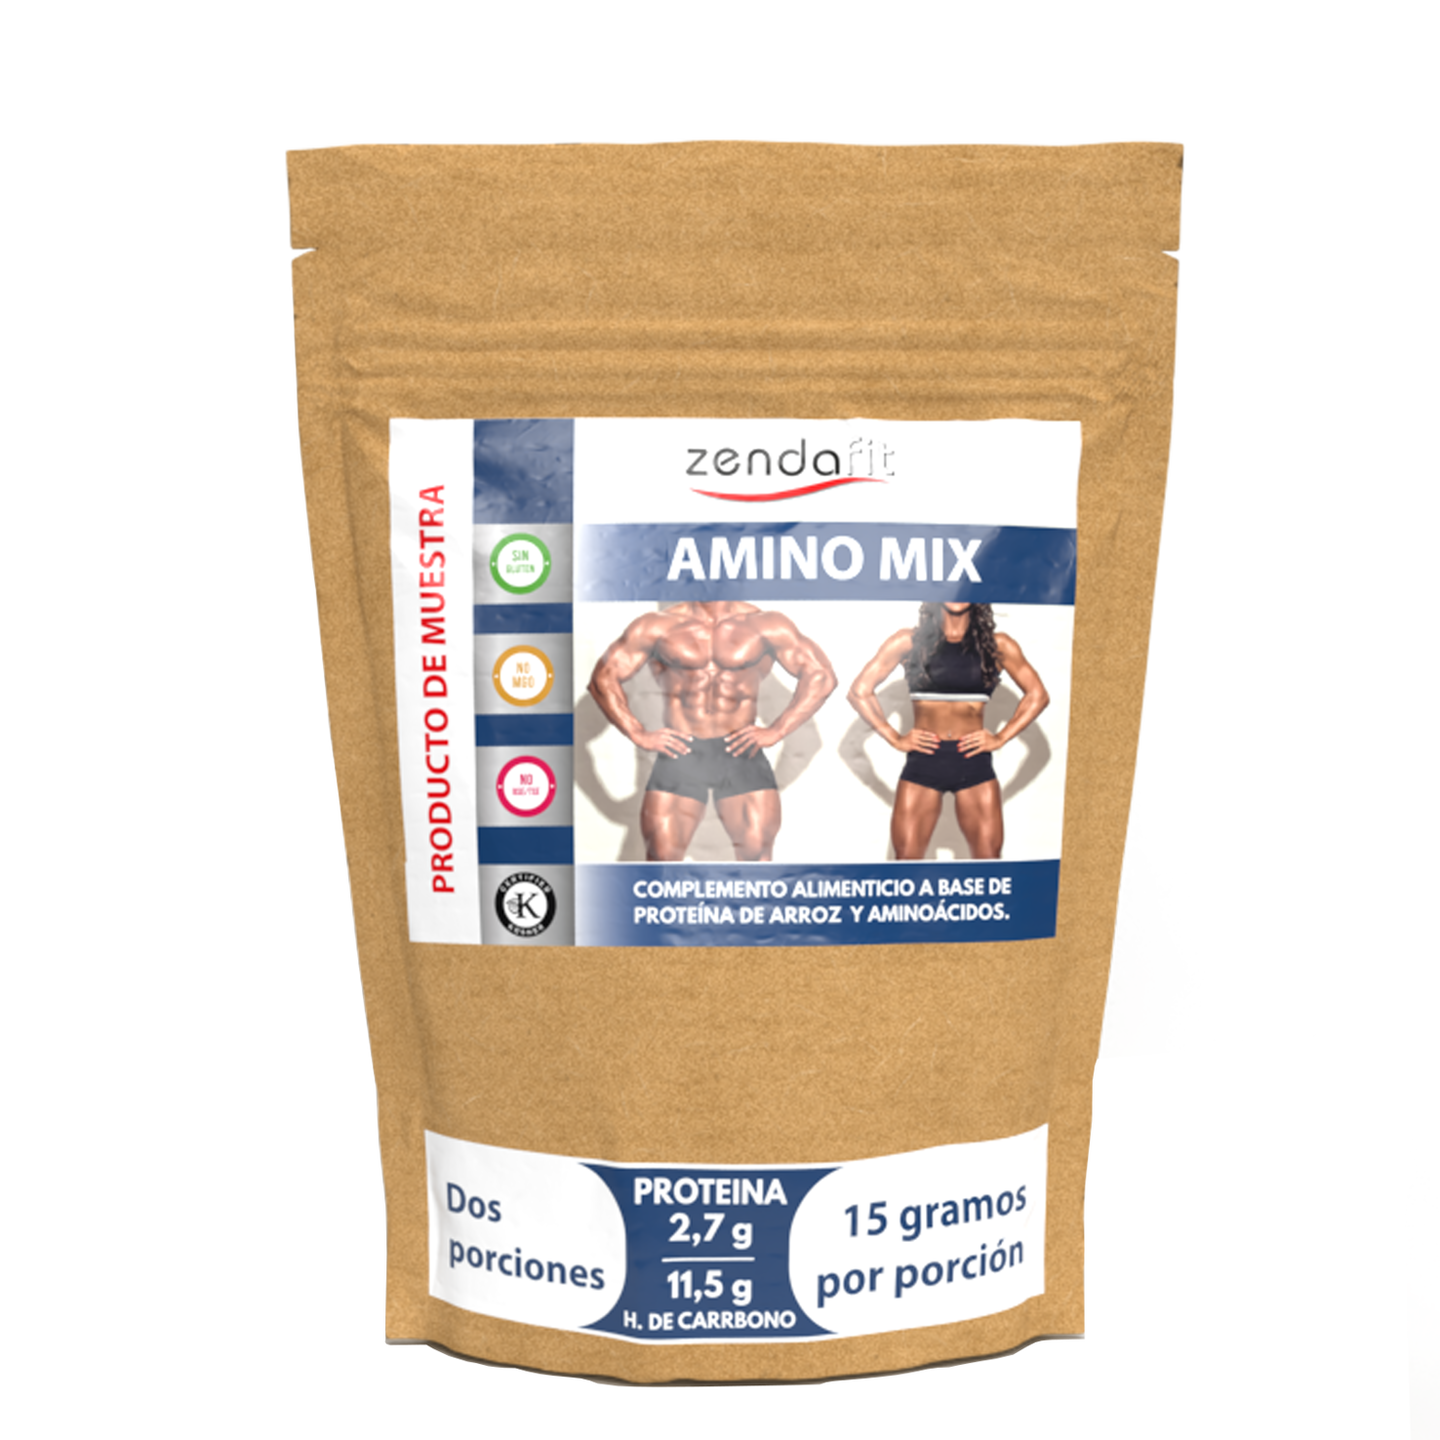 SAMPLE Amino Mix - 2 servings of 15 grams